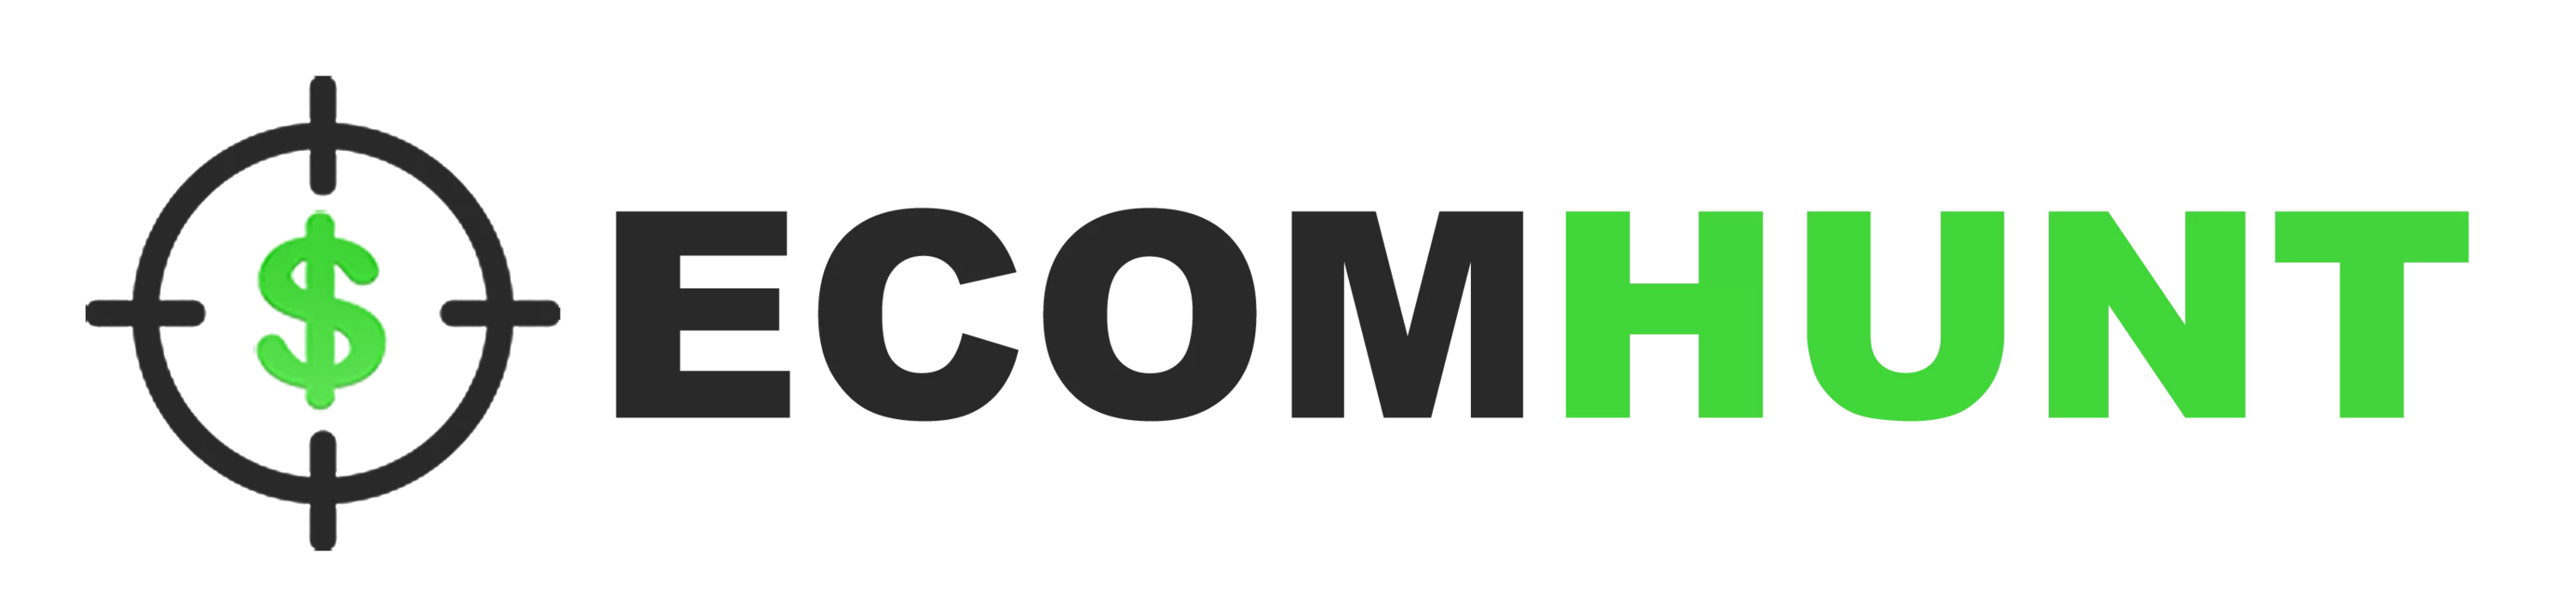 ecomhunt-logo